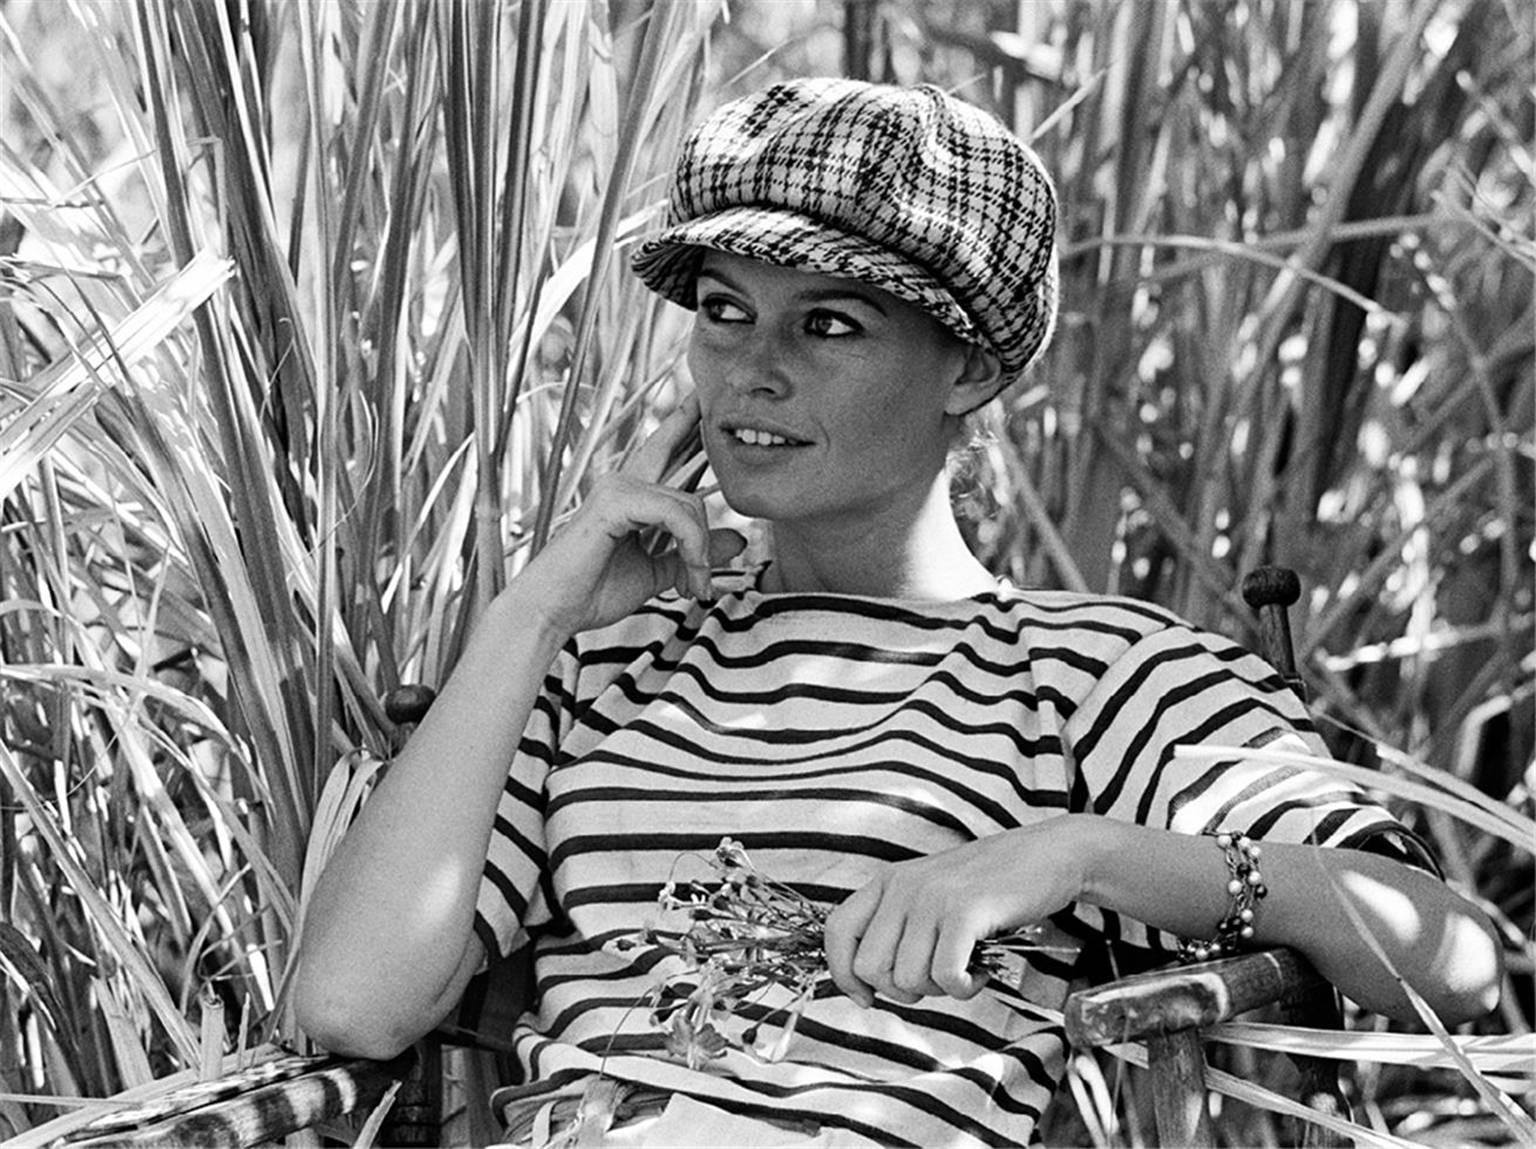 John R. Hamilton Black and White Photograph - Brigitte Bardot, during the filming of "Viva Maria"